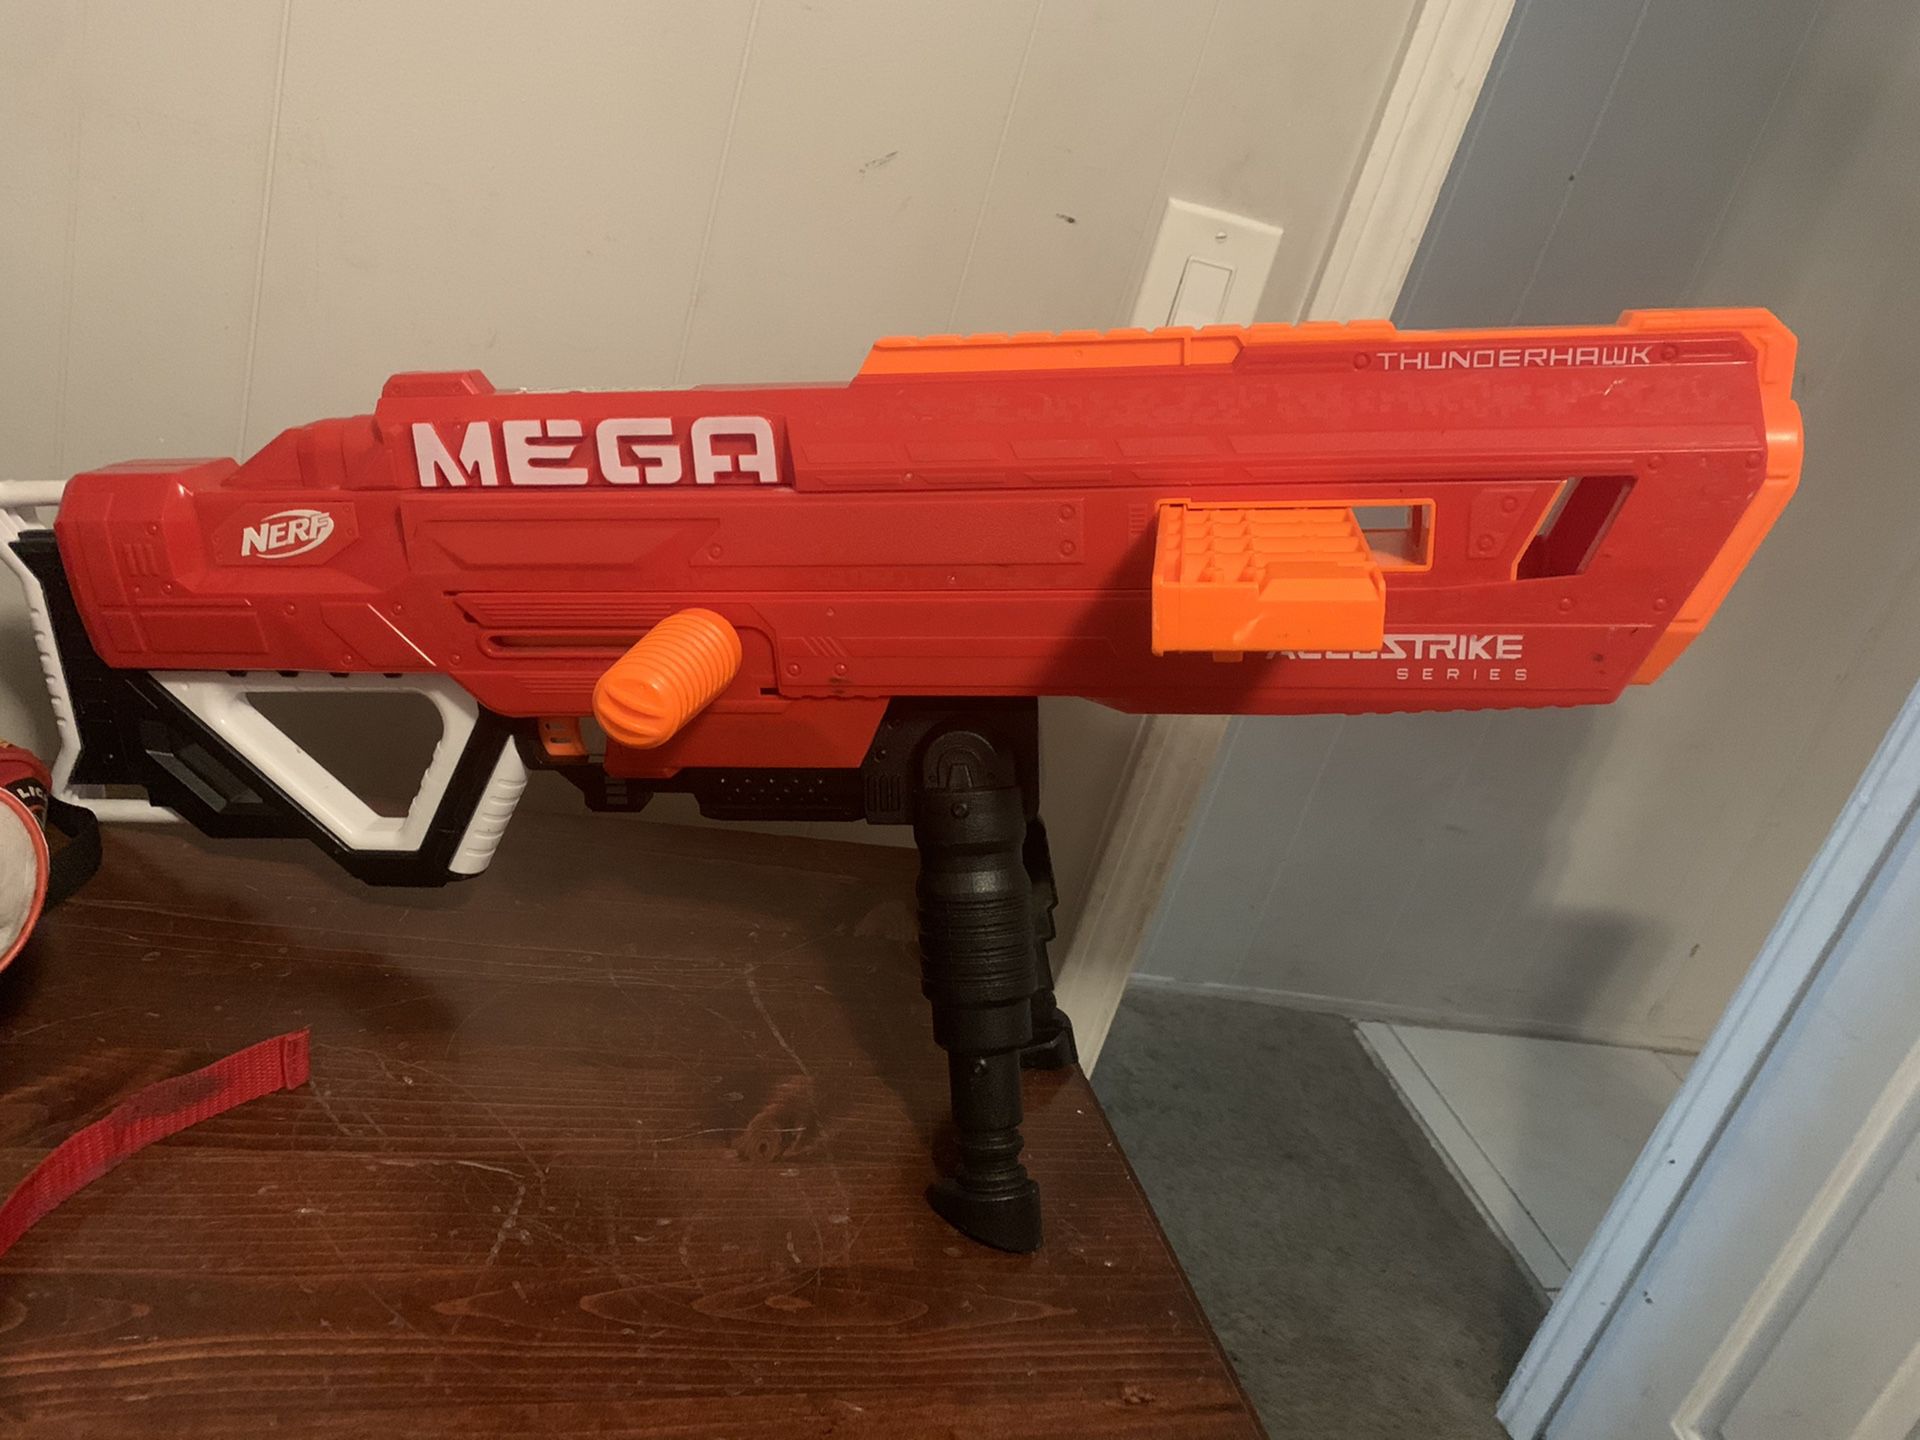 Mega nerf gun $15 in good condition